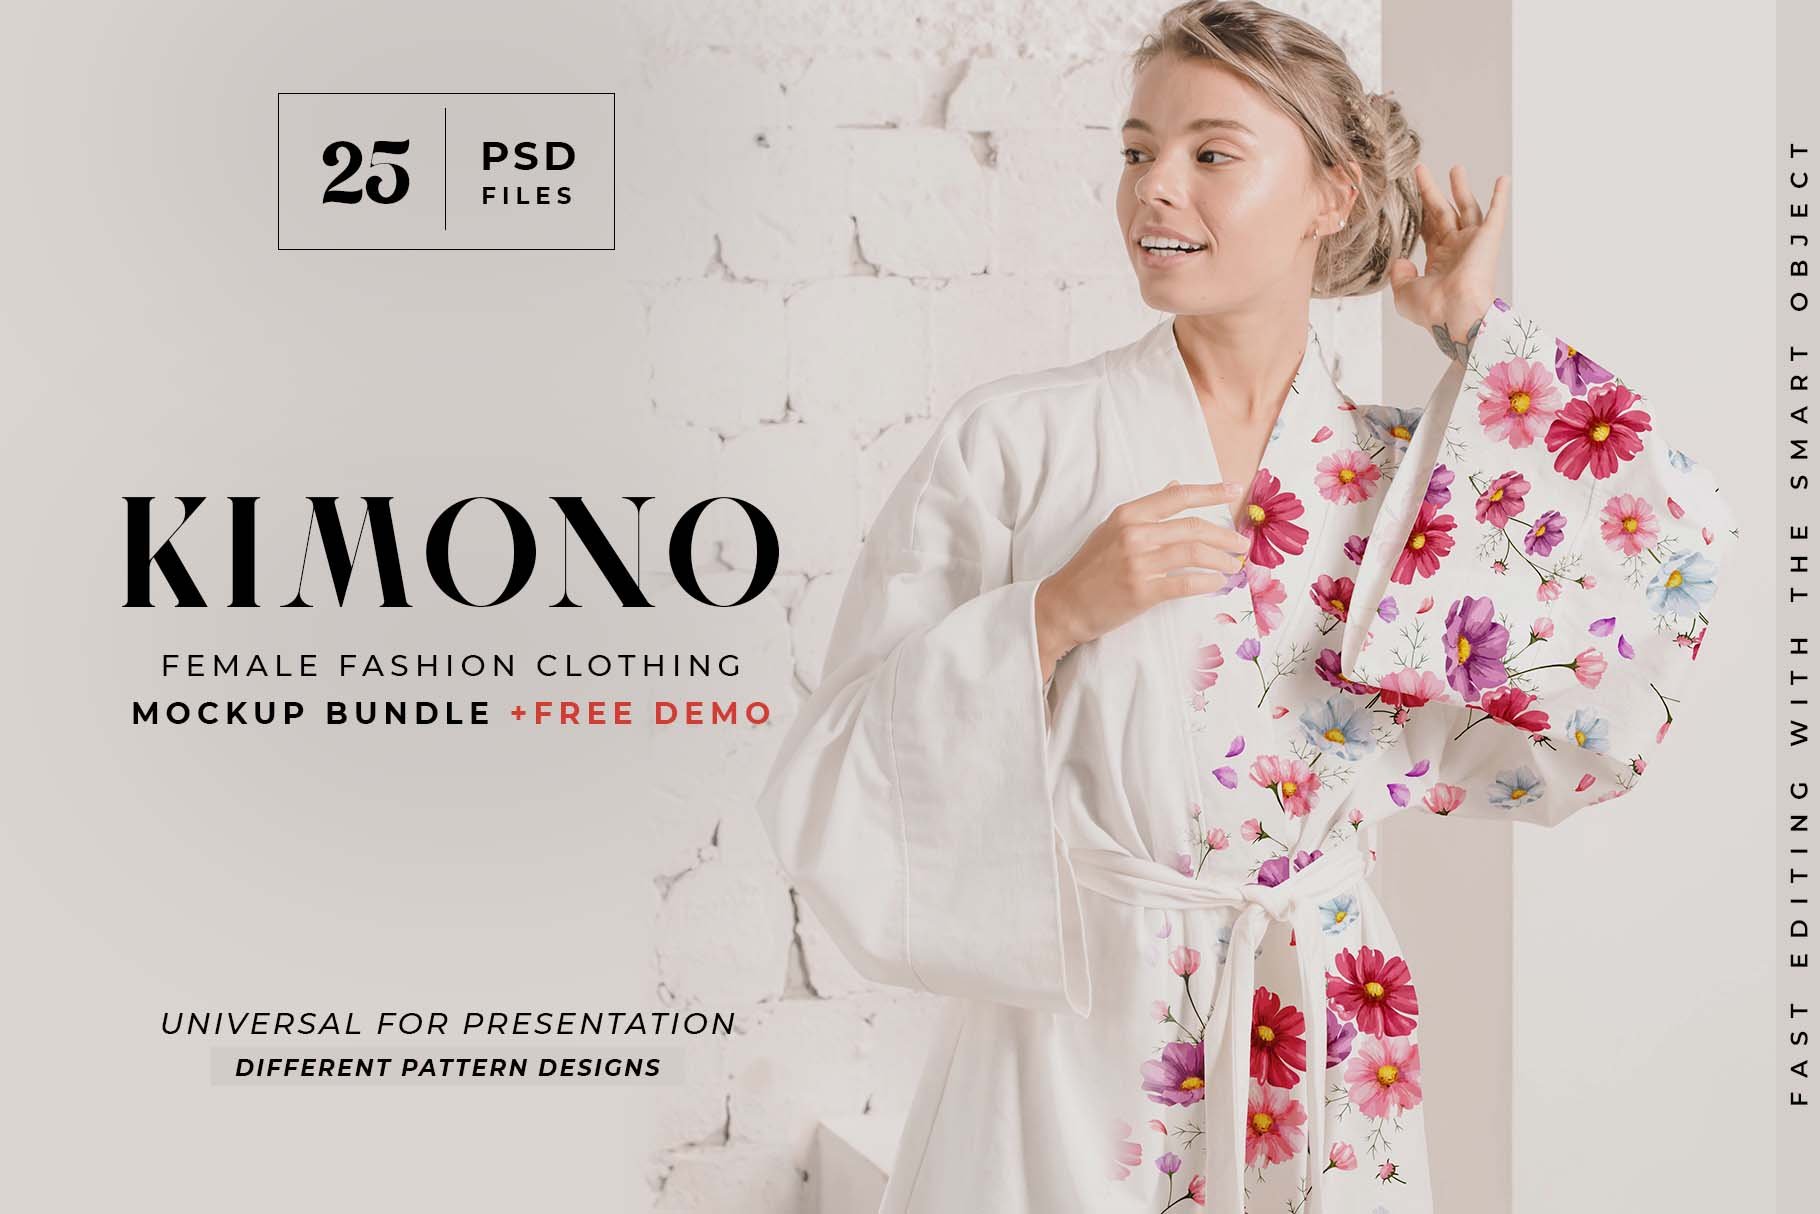 Kimono Dress Mockup Bundle + Freebie cover image.